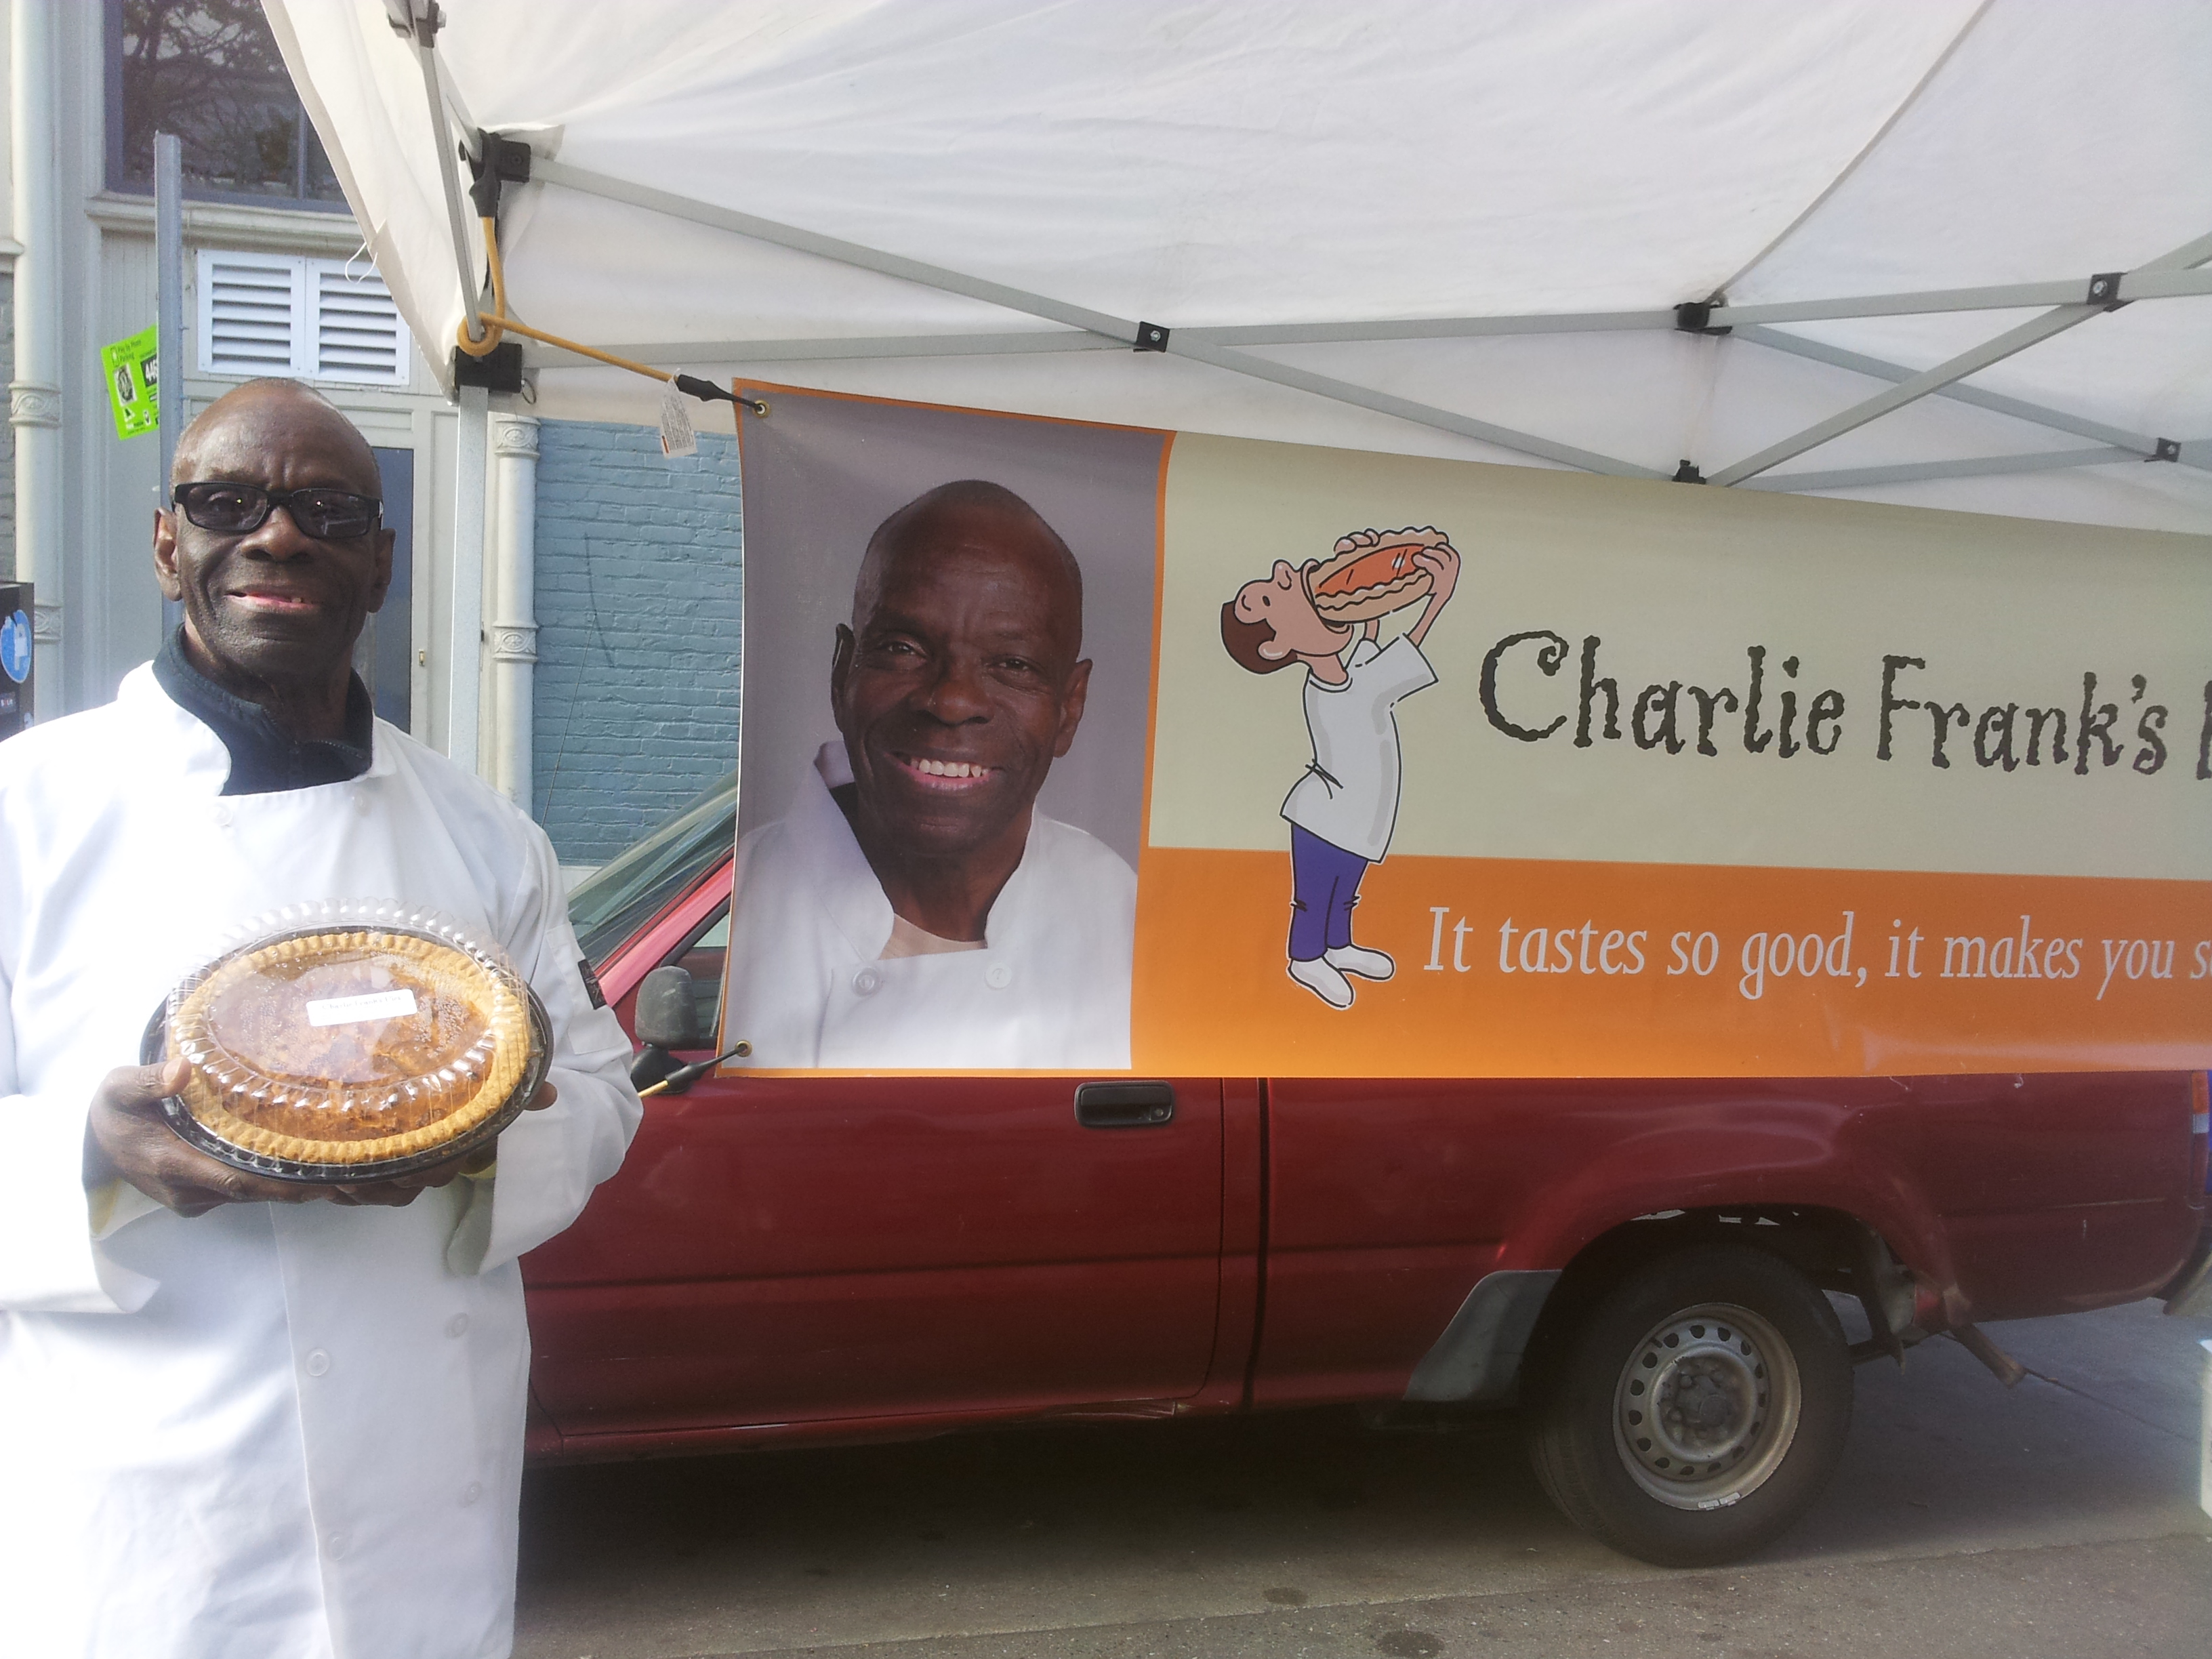 Charlie Frank's Pies